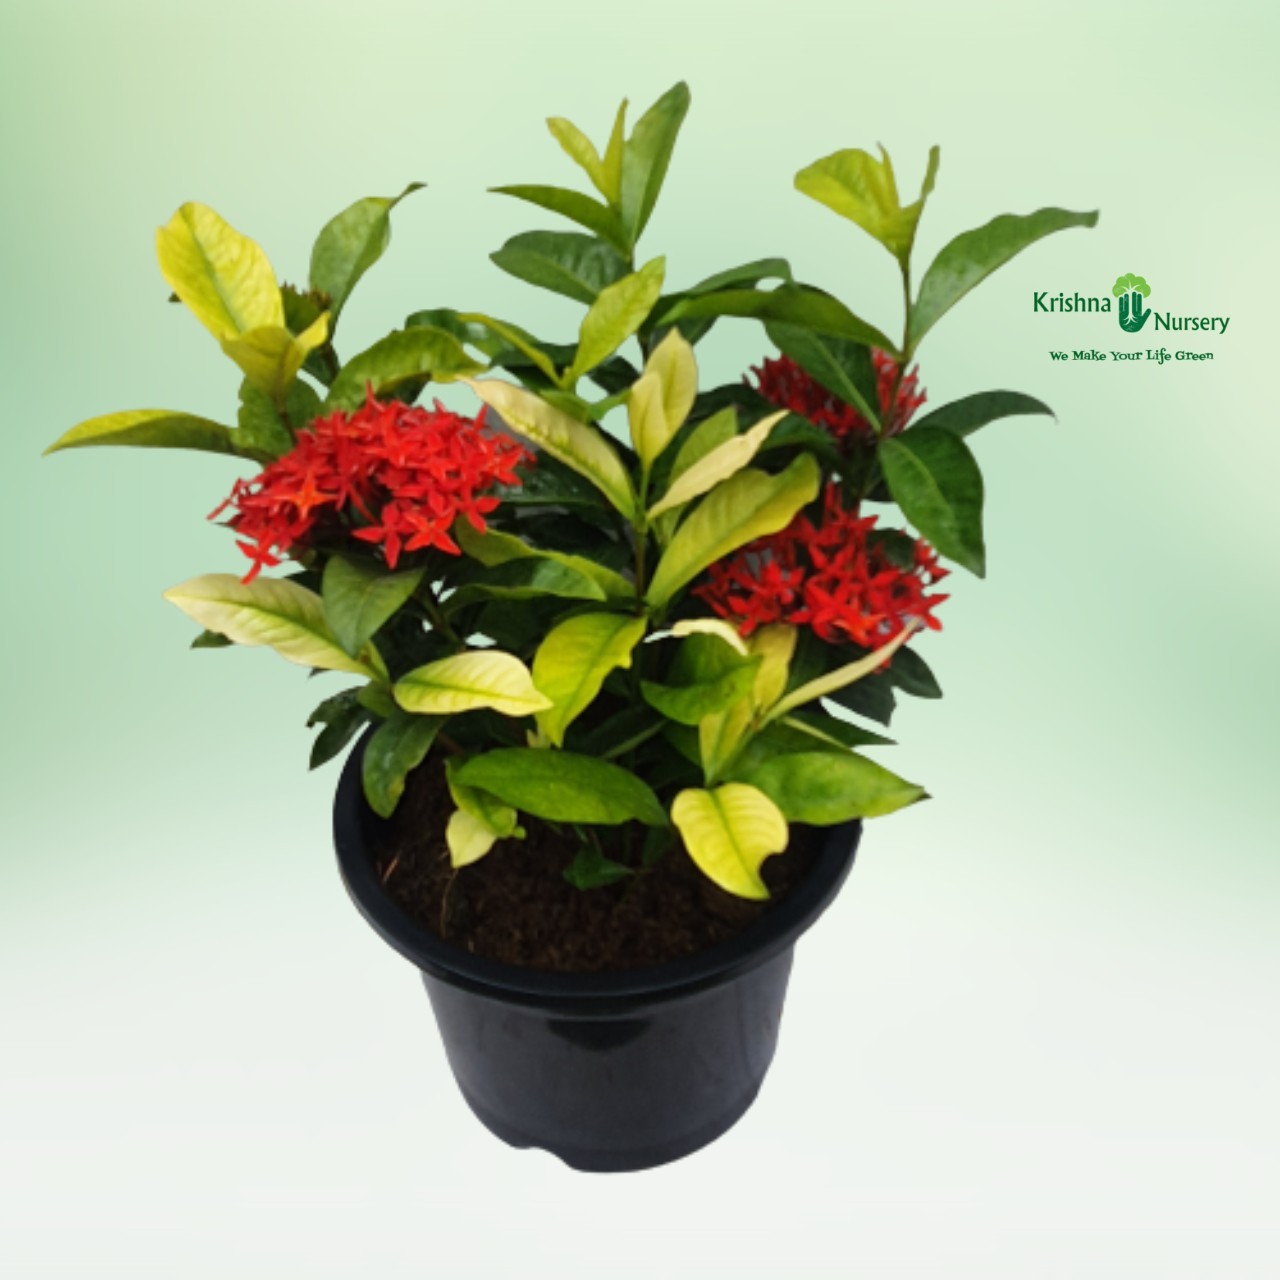 Singapuri Ixora Plant - 12 inch - Black Pot